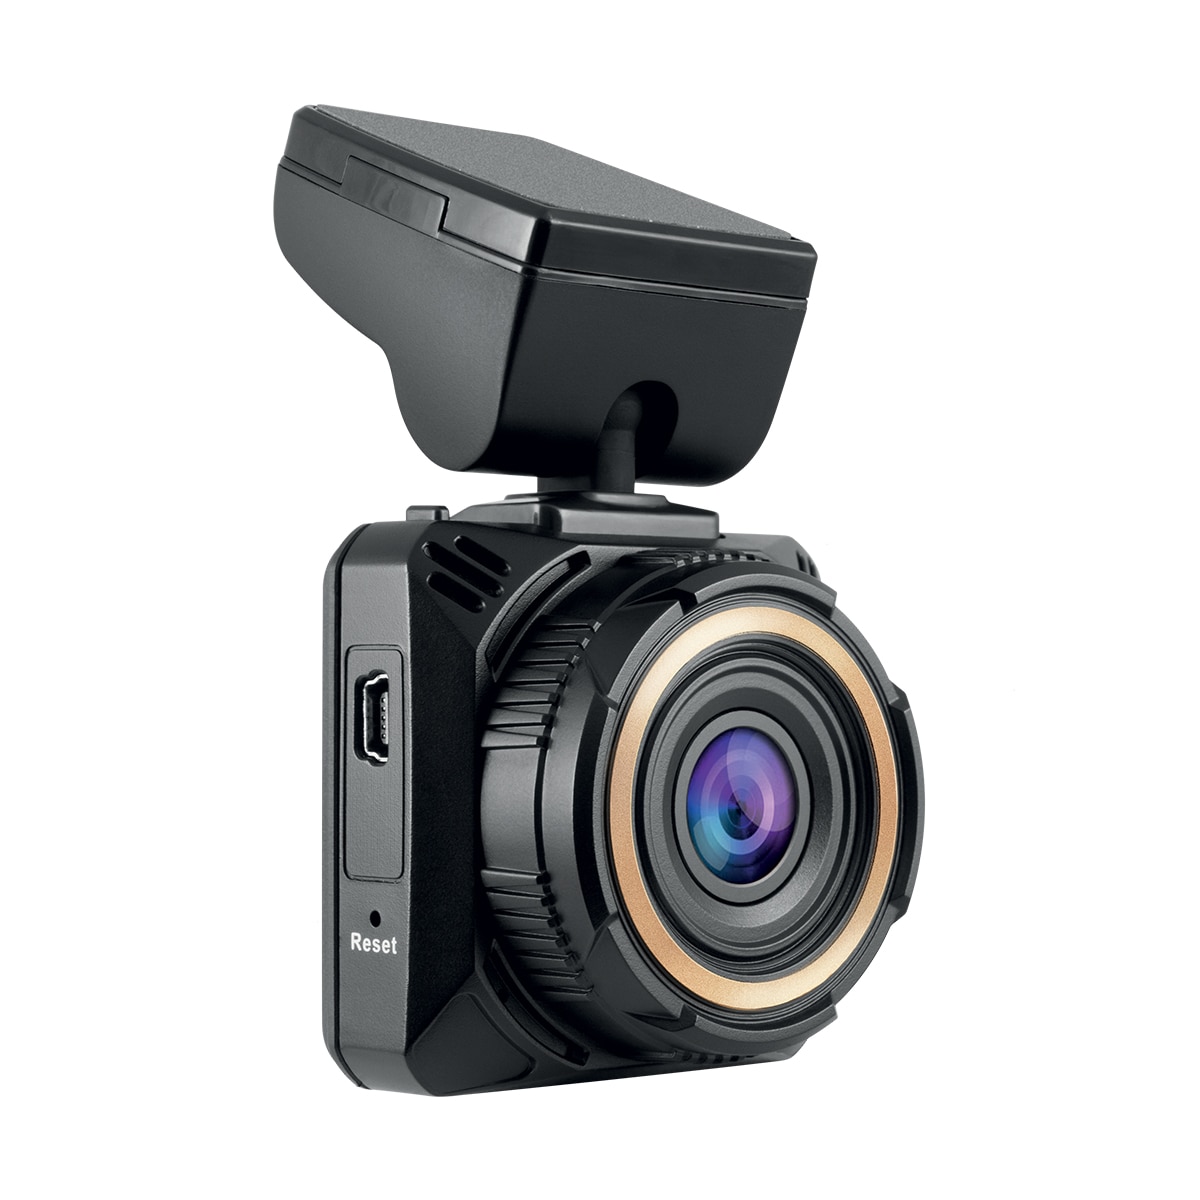 Fotografie Camera Auto DVR Navitel R600 Quad HD, ecran 2.0", inregistrare QHD + audio, vizibilitate 170 grade, G-sensor, auto-start, Negru